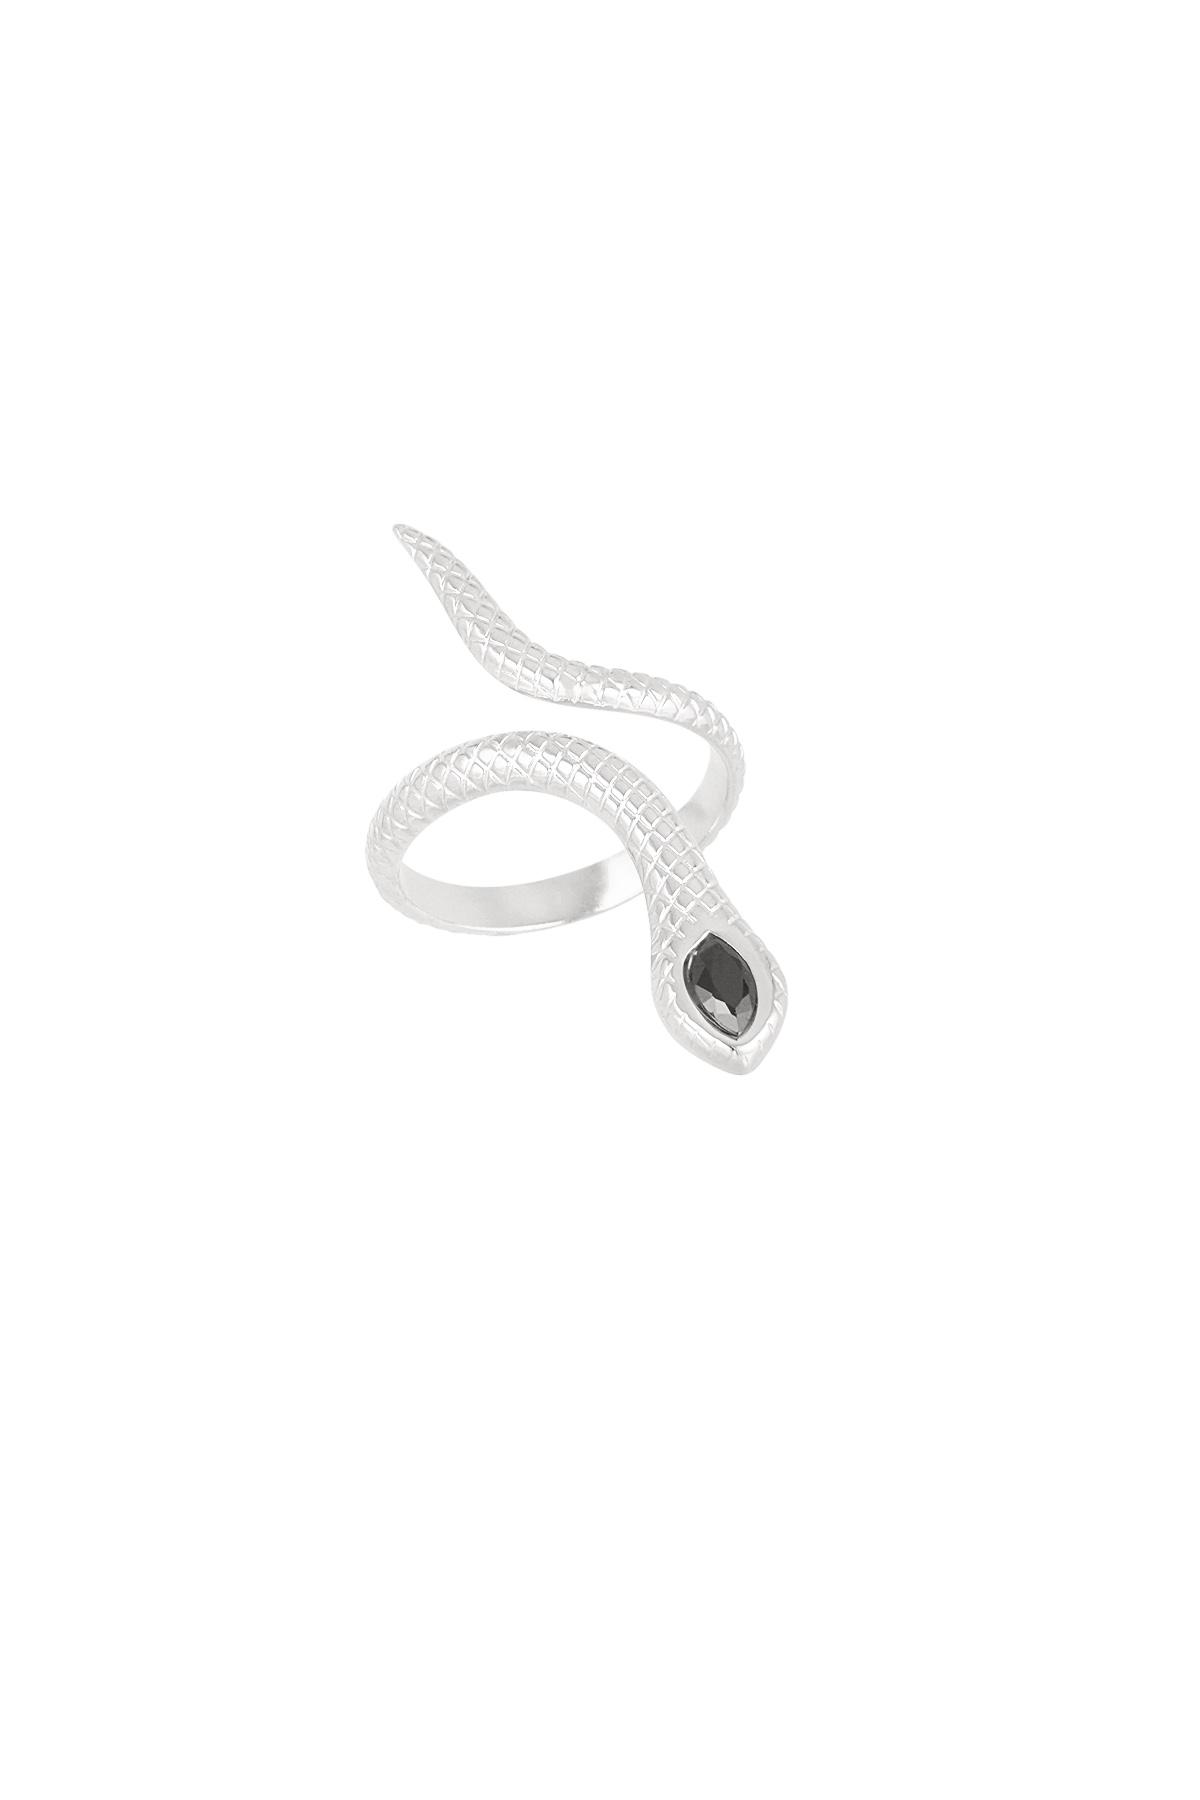 Kara yılan yüzüğü - gümüş  Resim5